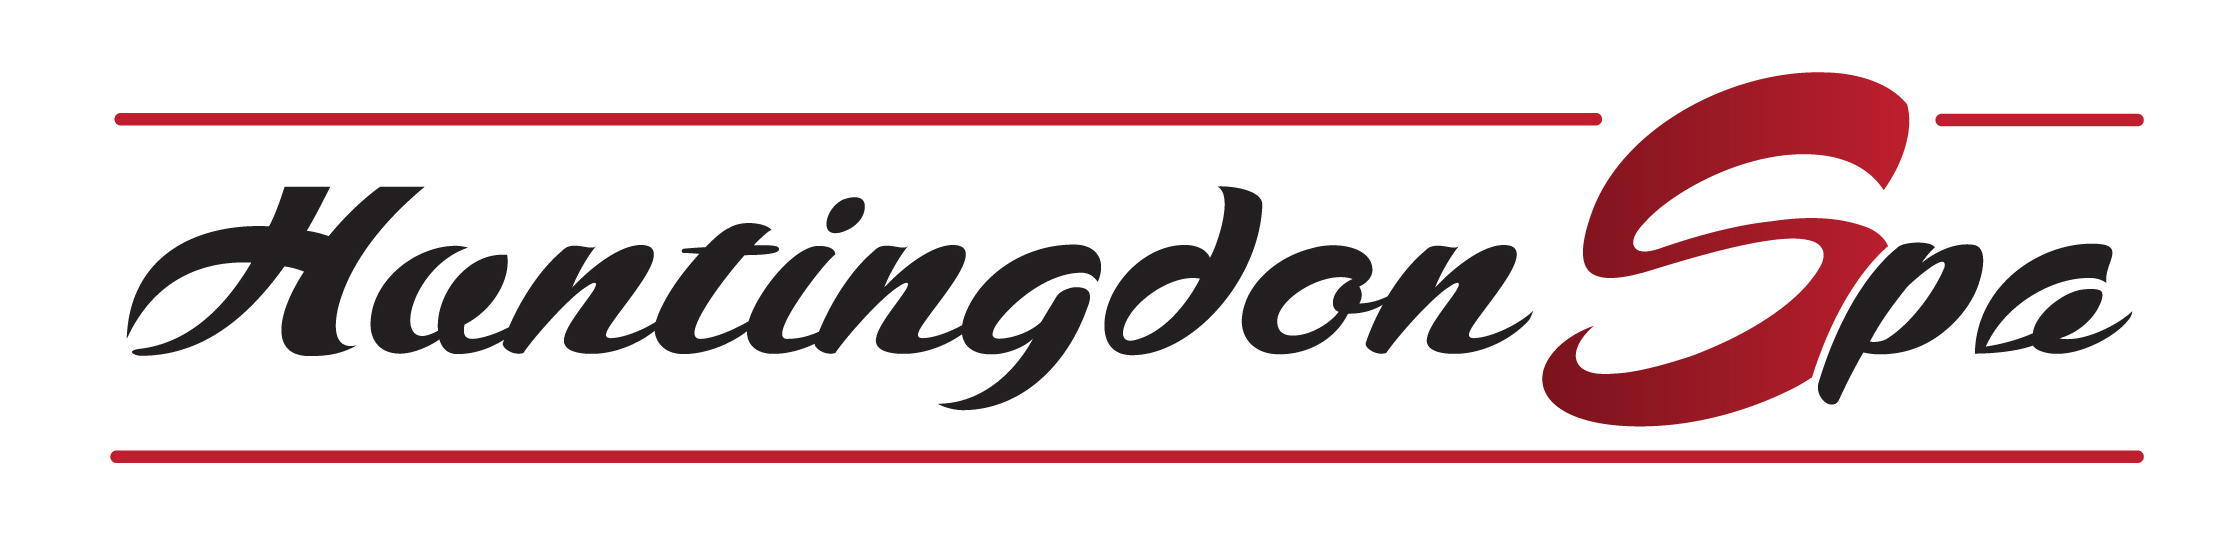 huntingdon spa logo[1] - hypnotherapy in Huntingdon